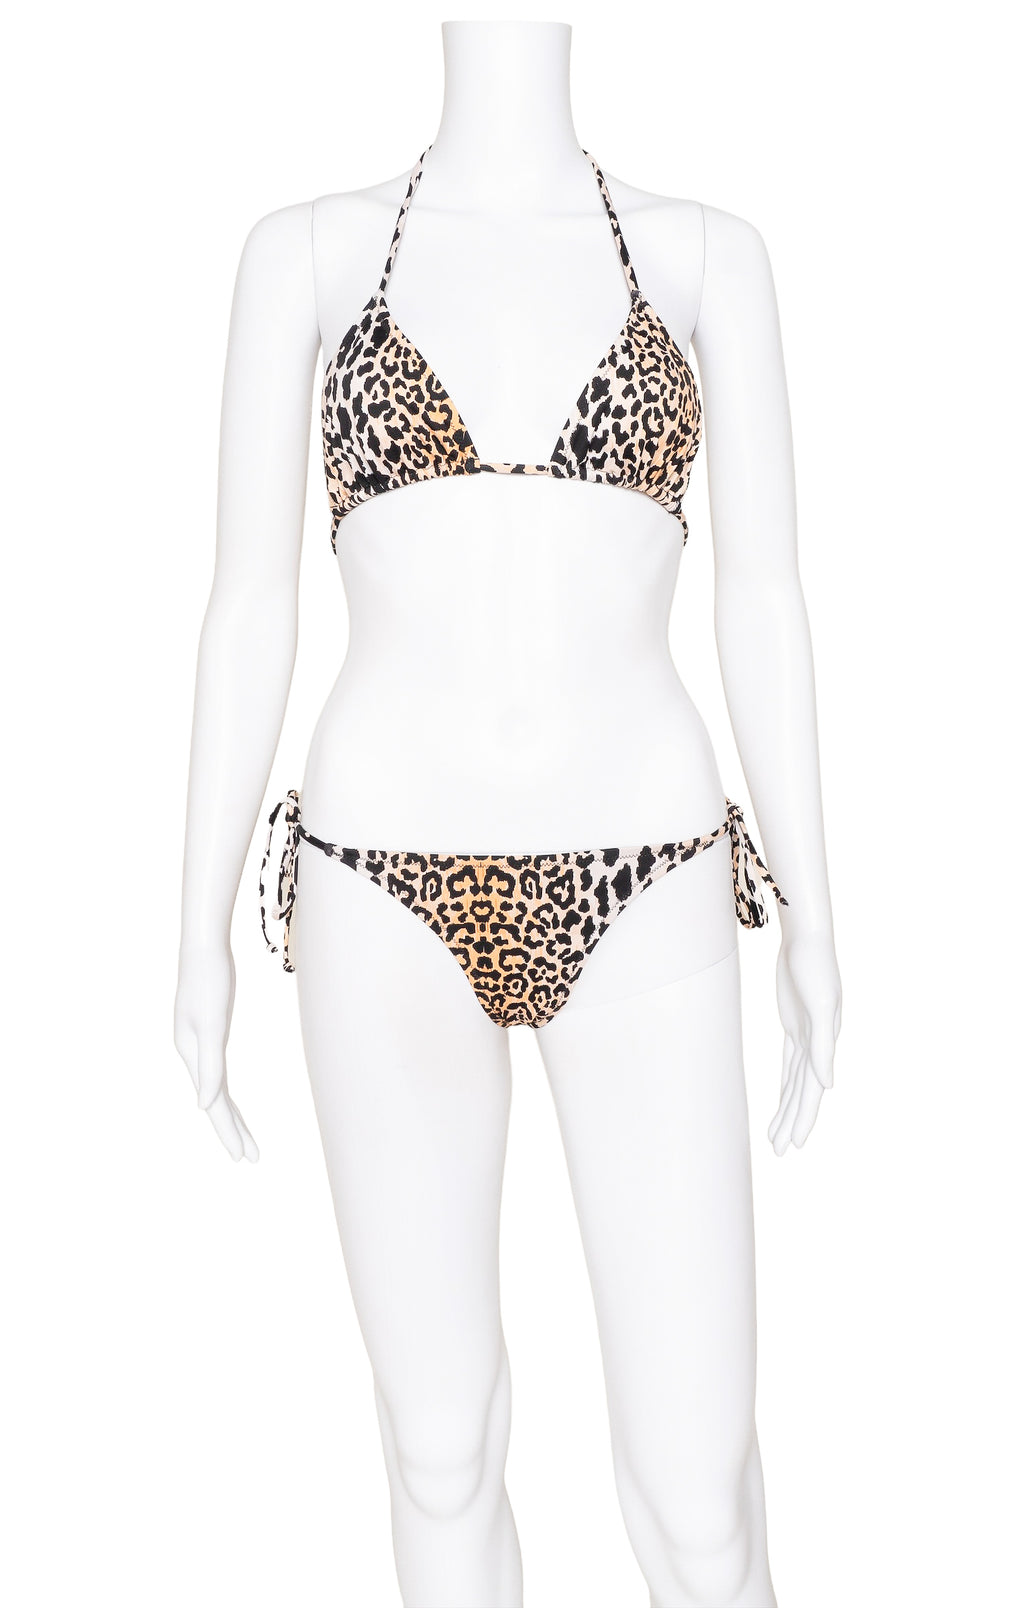 REINA OLGA Bikini Set Size: Top - No size tags, fits like S/M Bottoms - Marked a size 2, fits like M